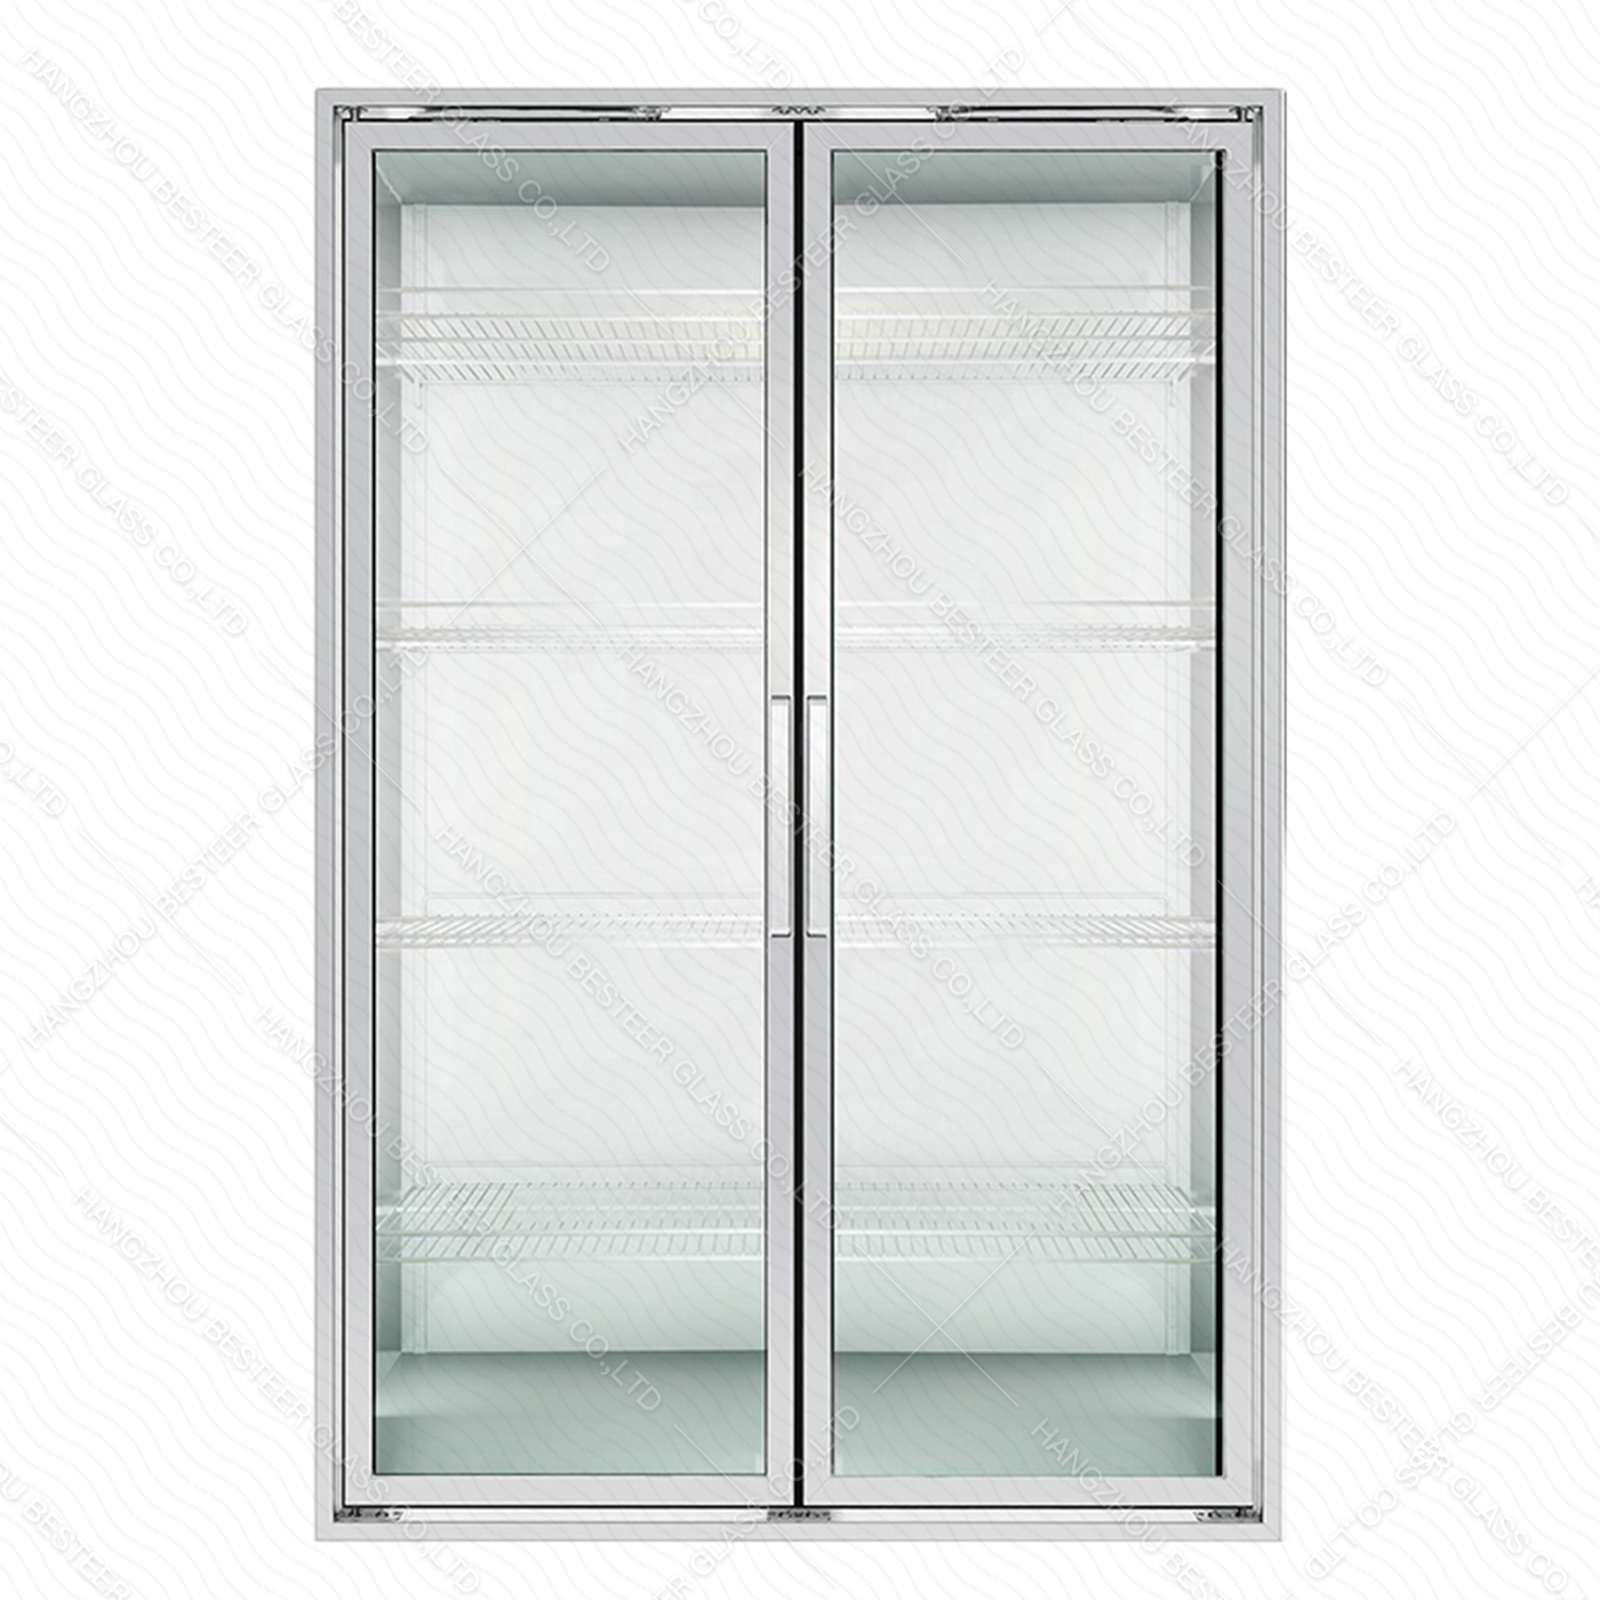 Puerta de vidrio con pantalla de marco de aluminio de lado a lado para sistema de cámara fría